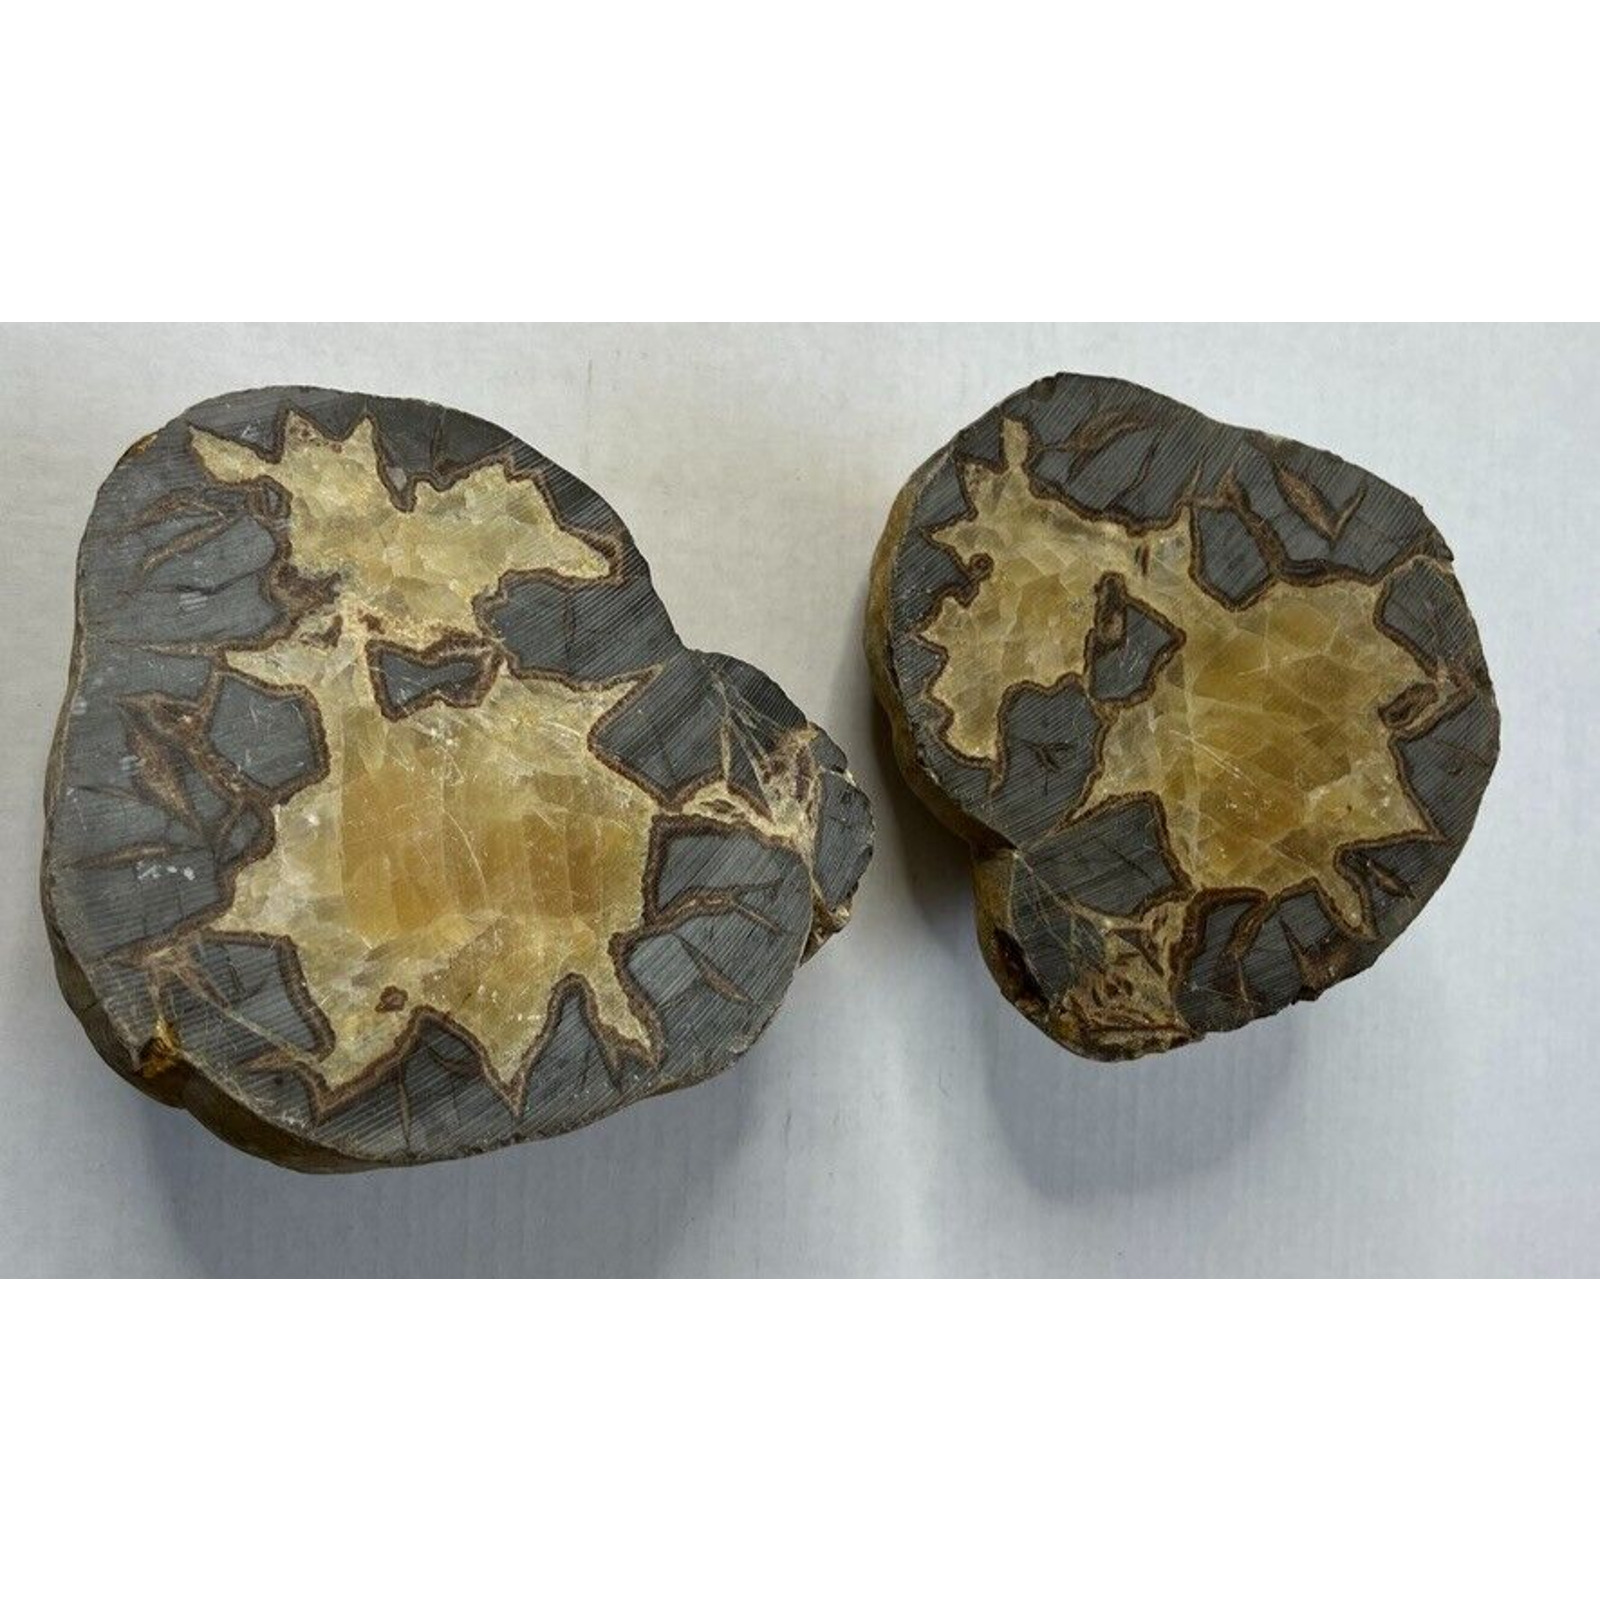 (2) Beautiful Septarian Nodule Geode Dragon Stone Polished Sides - 8 lbs, 8 oz